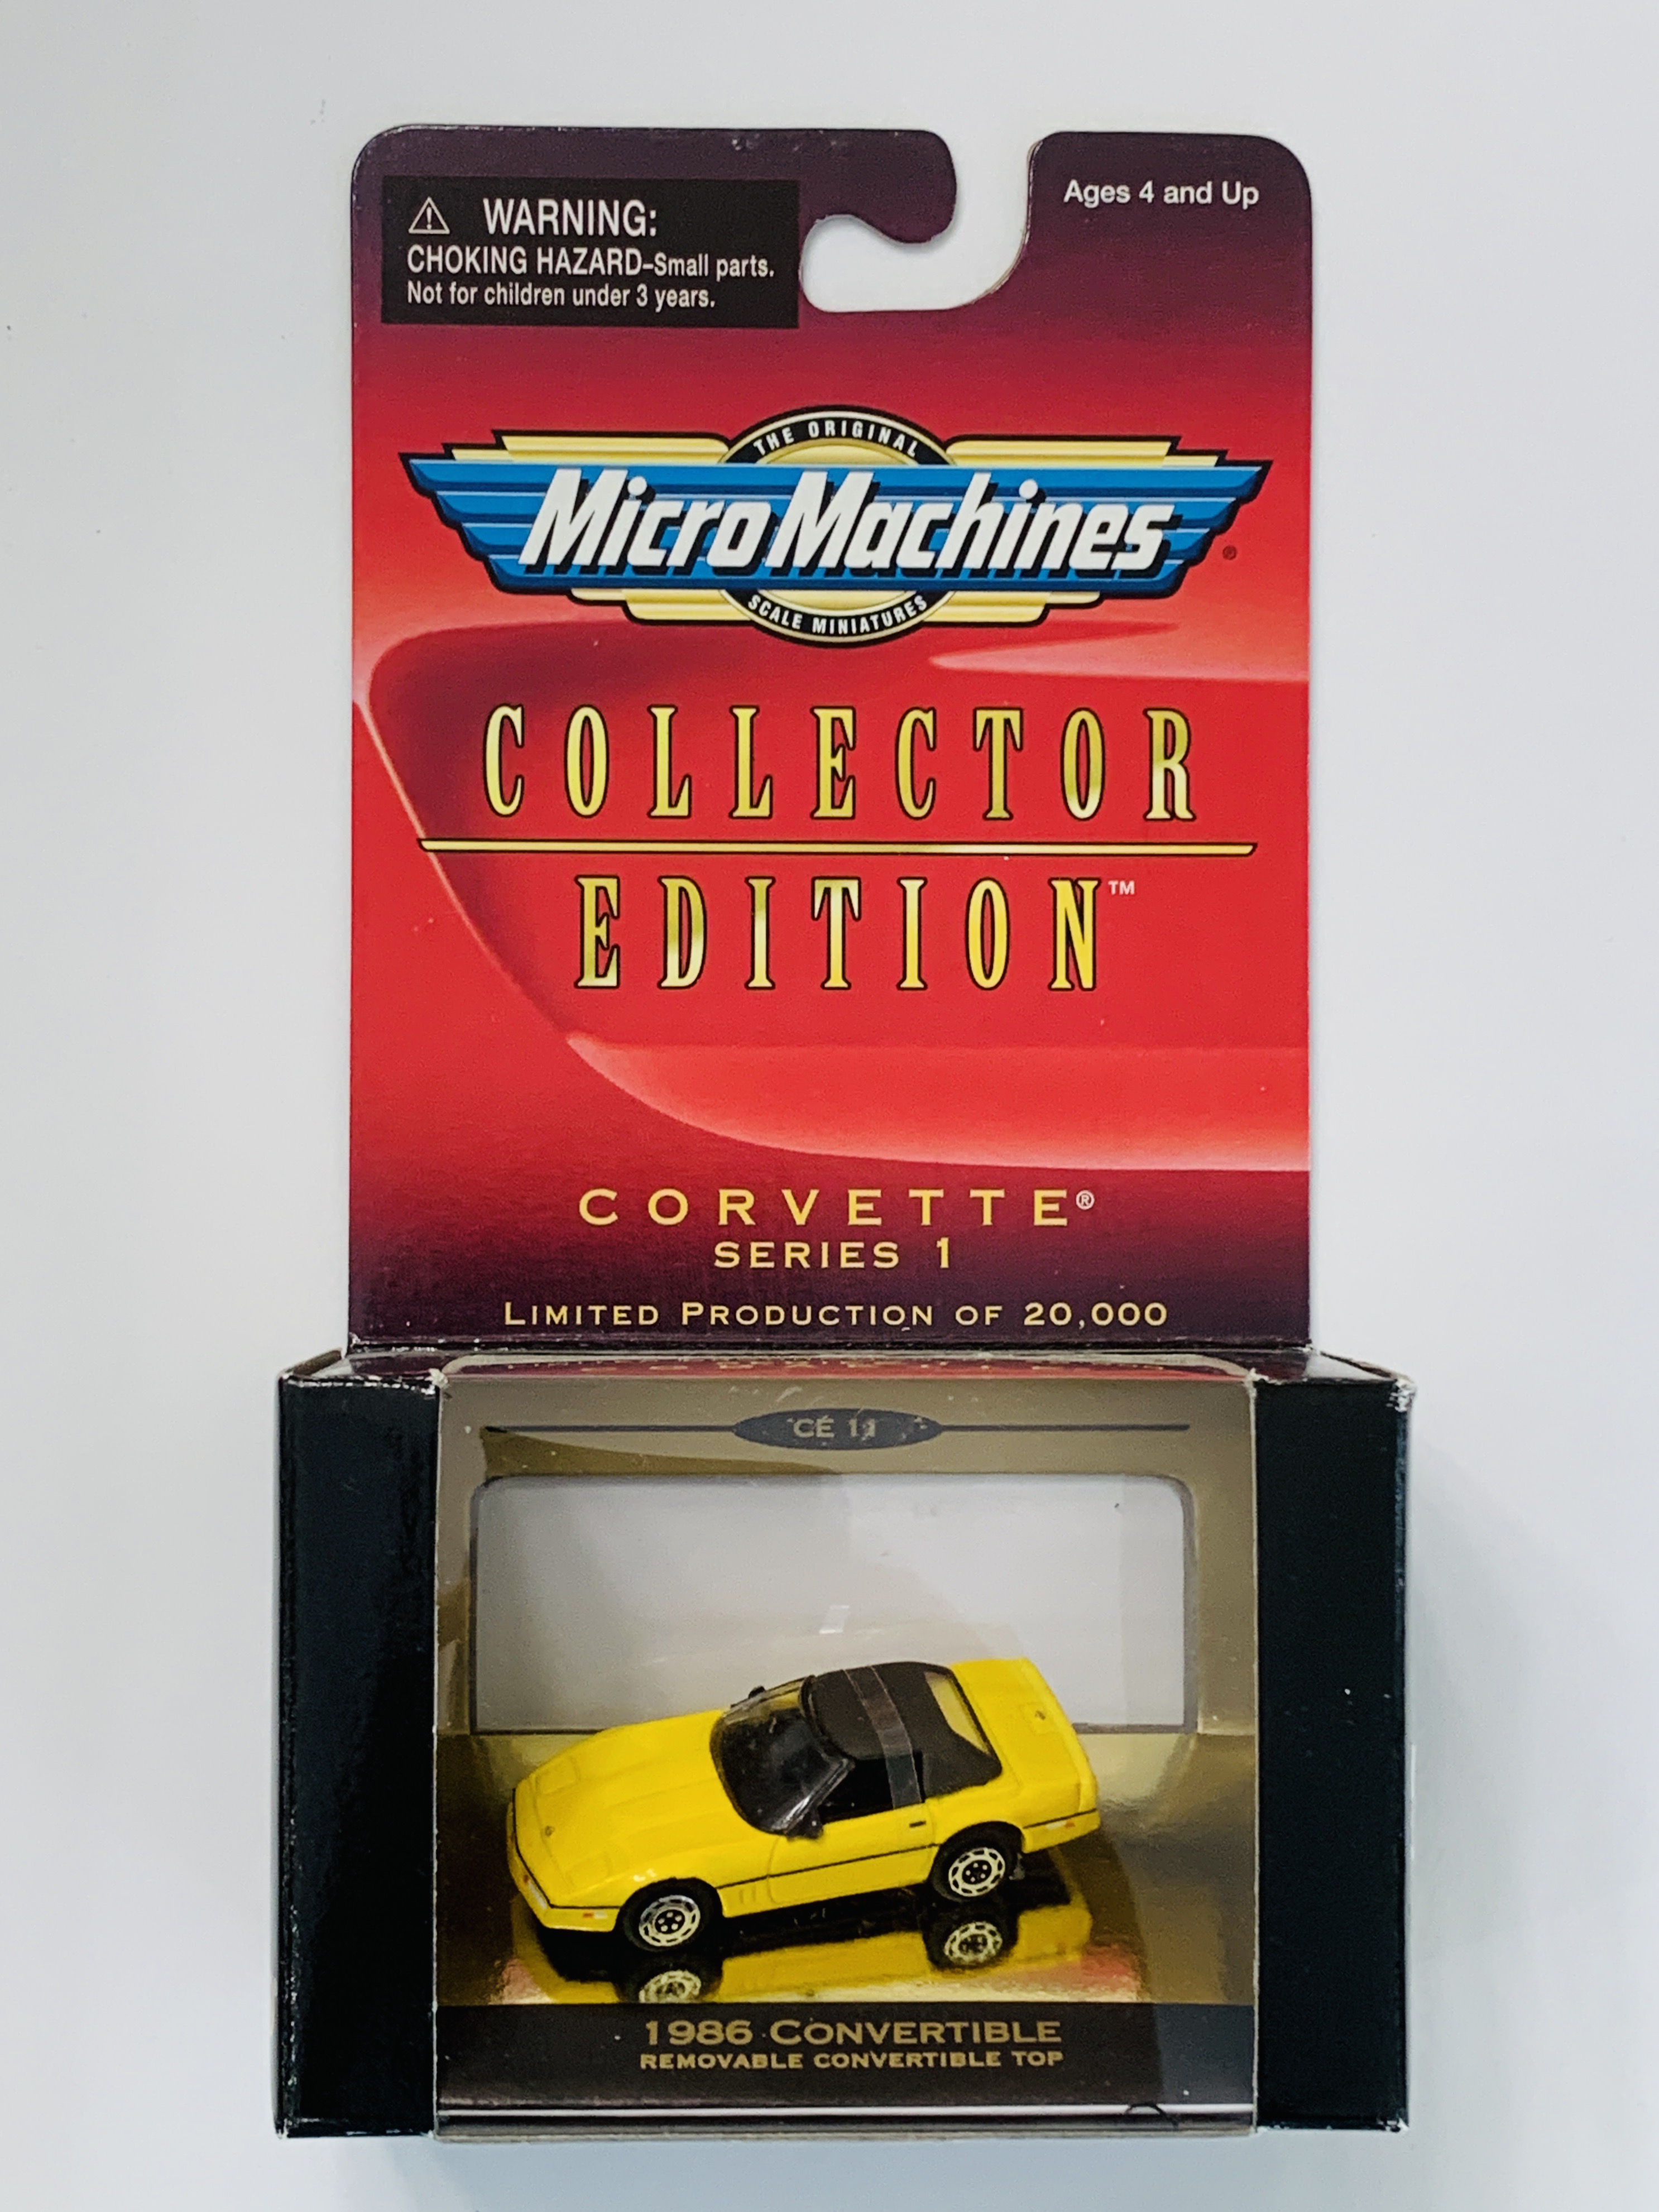 Micro Machines Collector Edition Corvette Series 1 1986 Convertible